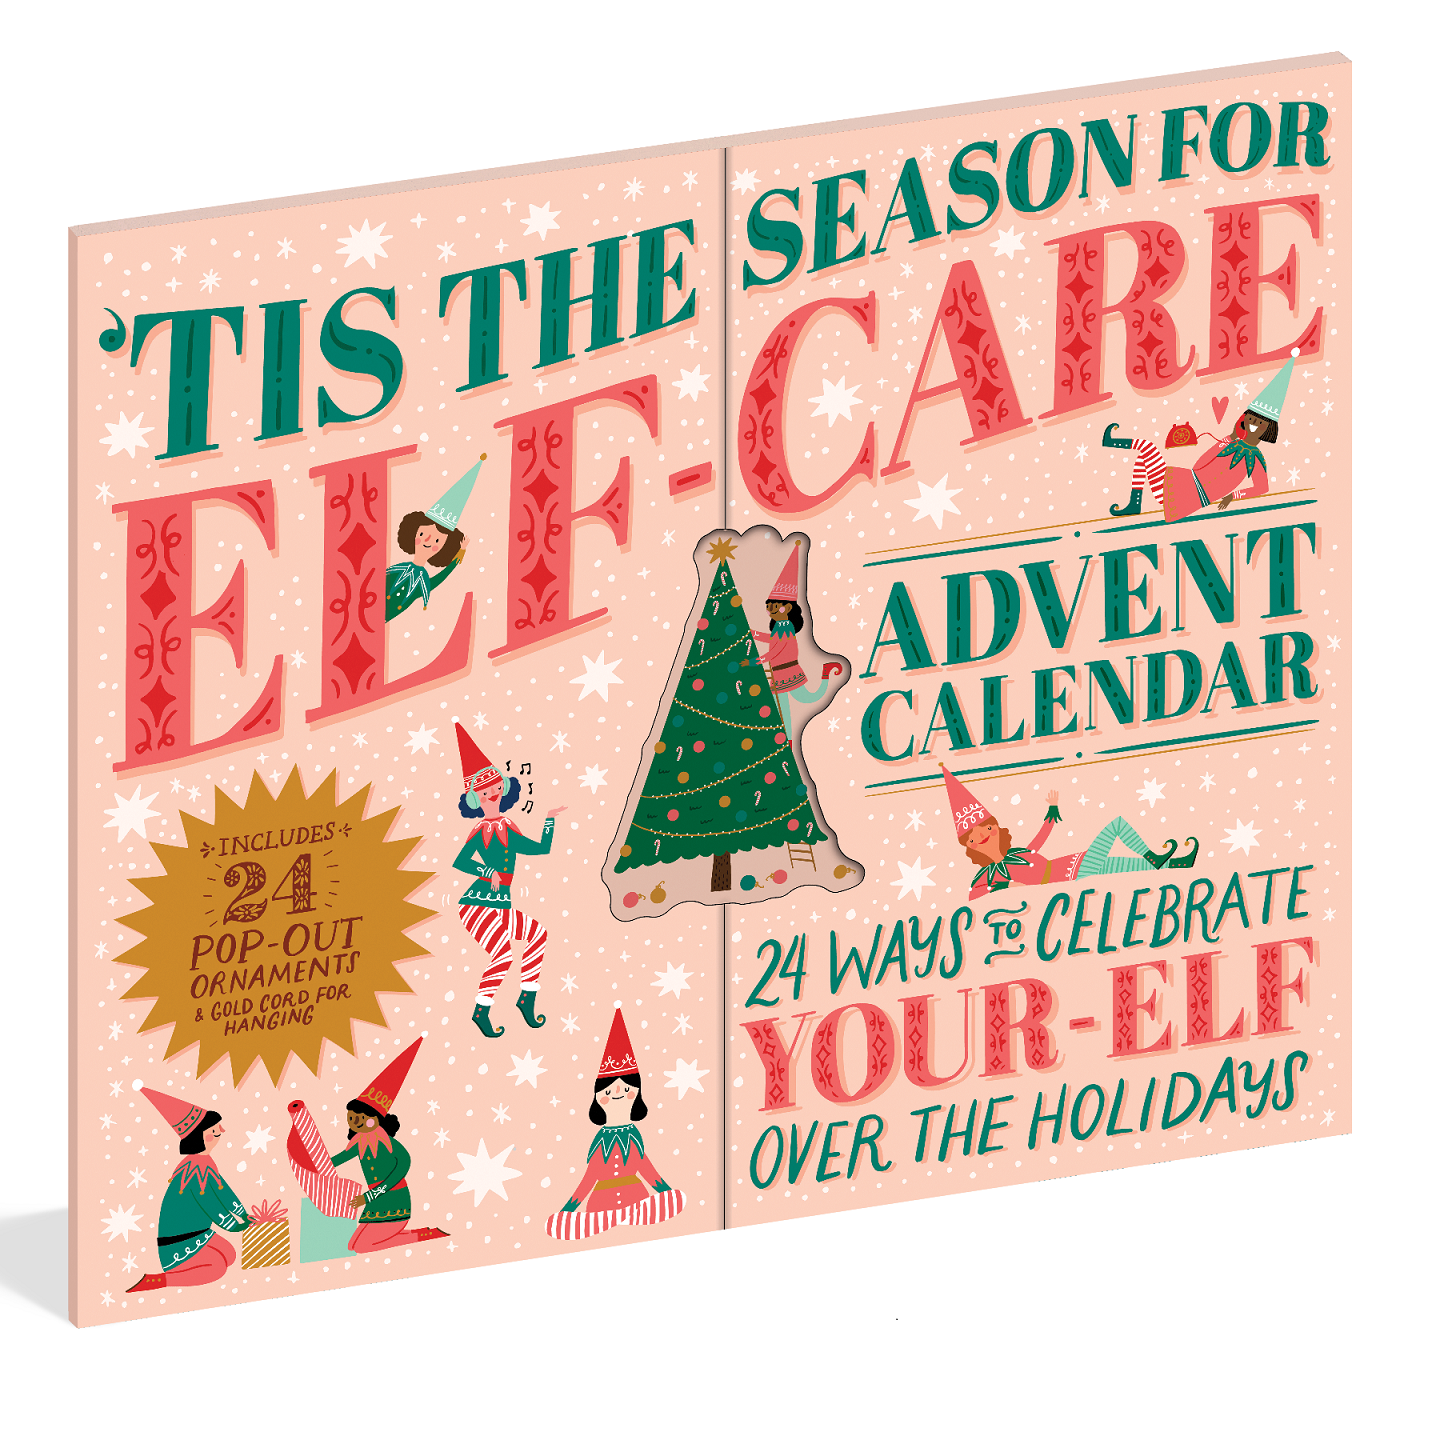 Advent Calendar - 'Tis The Season For Elf-Care